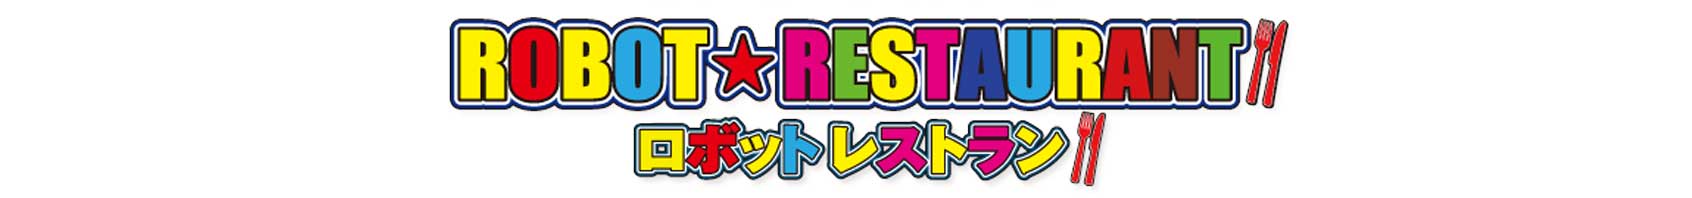 Robot Restaurant Logo